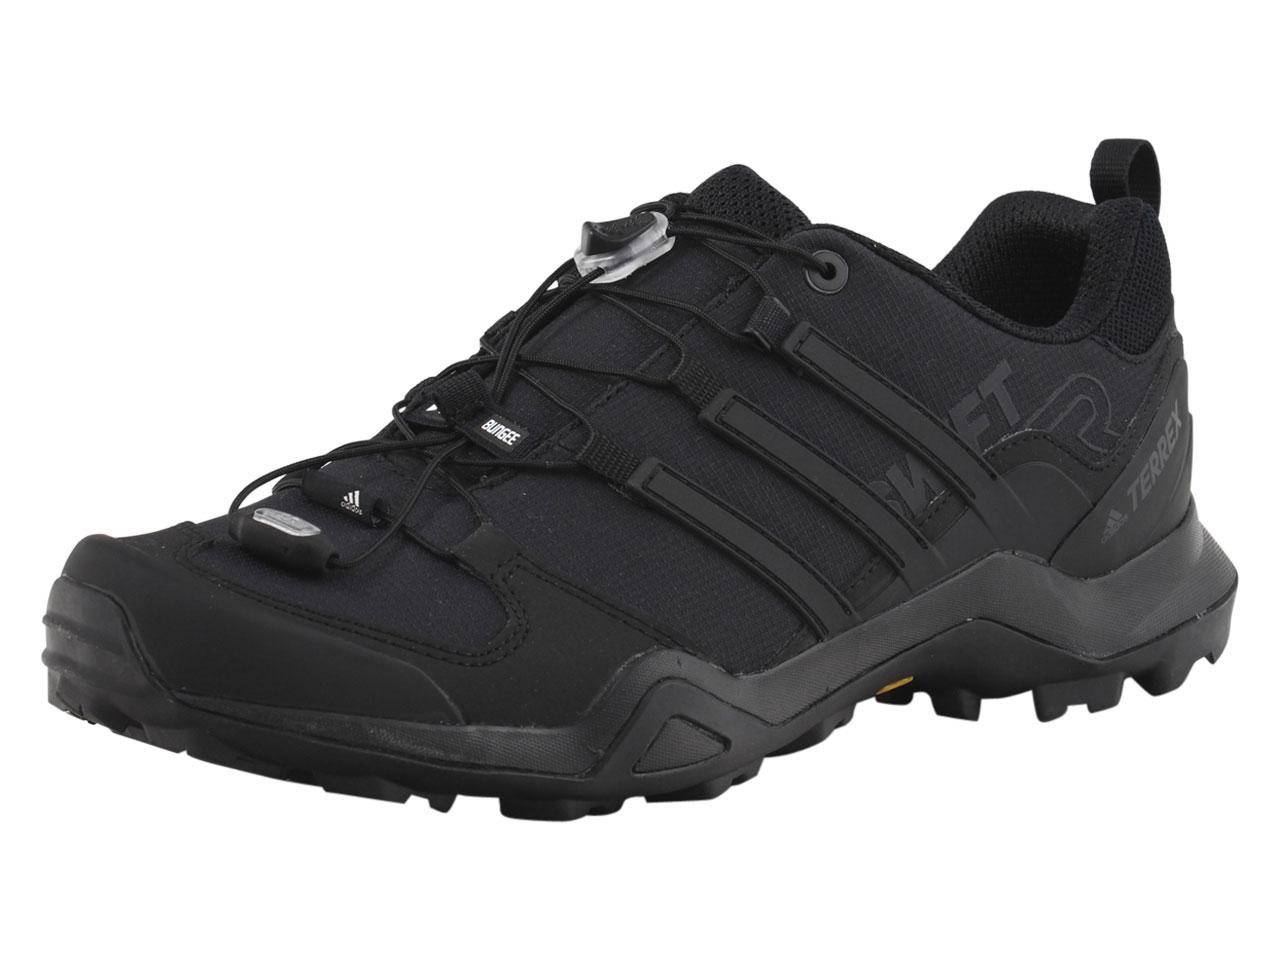 Adidas Men's Terrex Swift R2 Hiking Sneakers Shoes - Black/Black/Black - 9 D(M) US